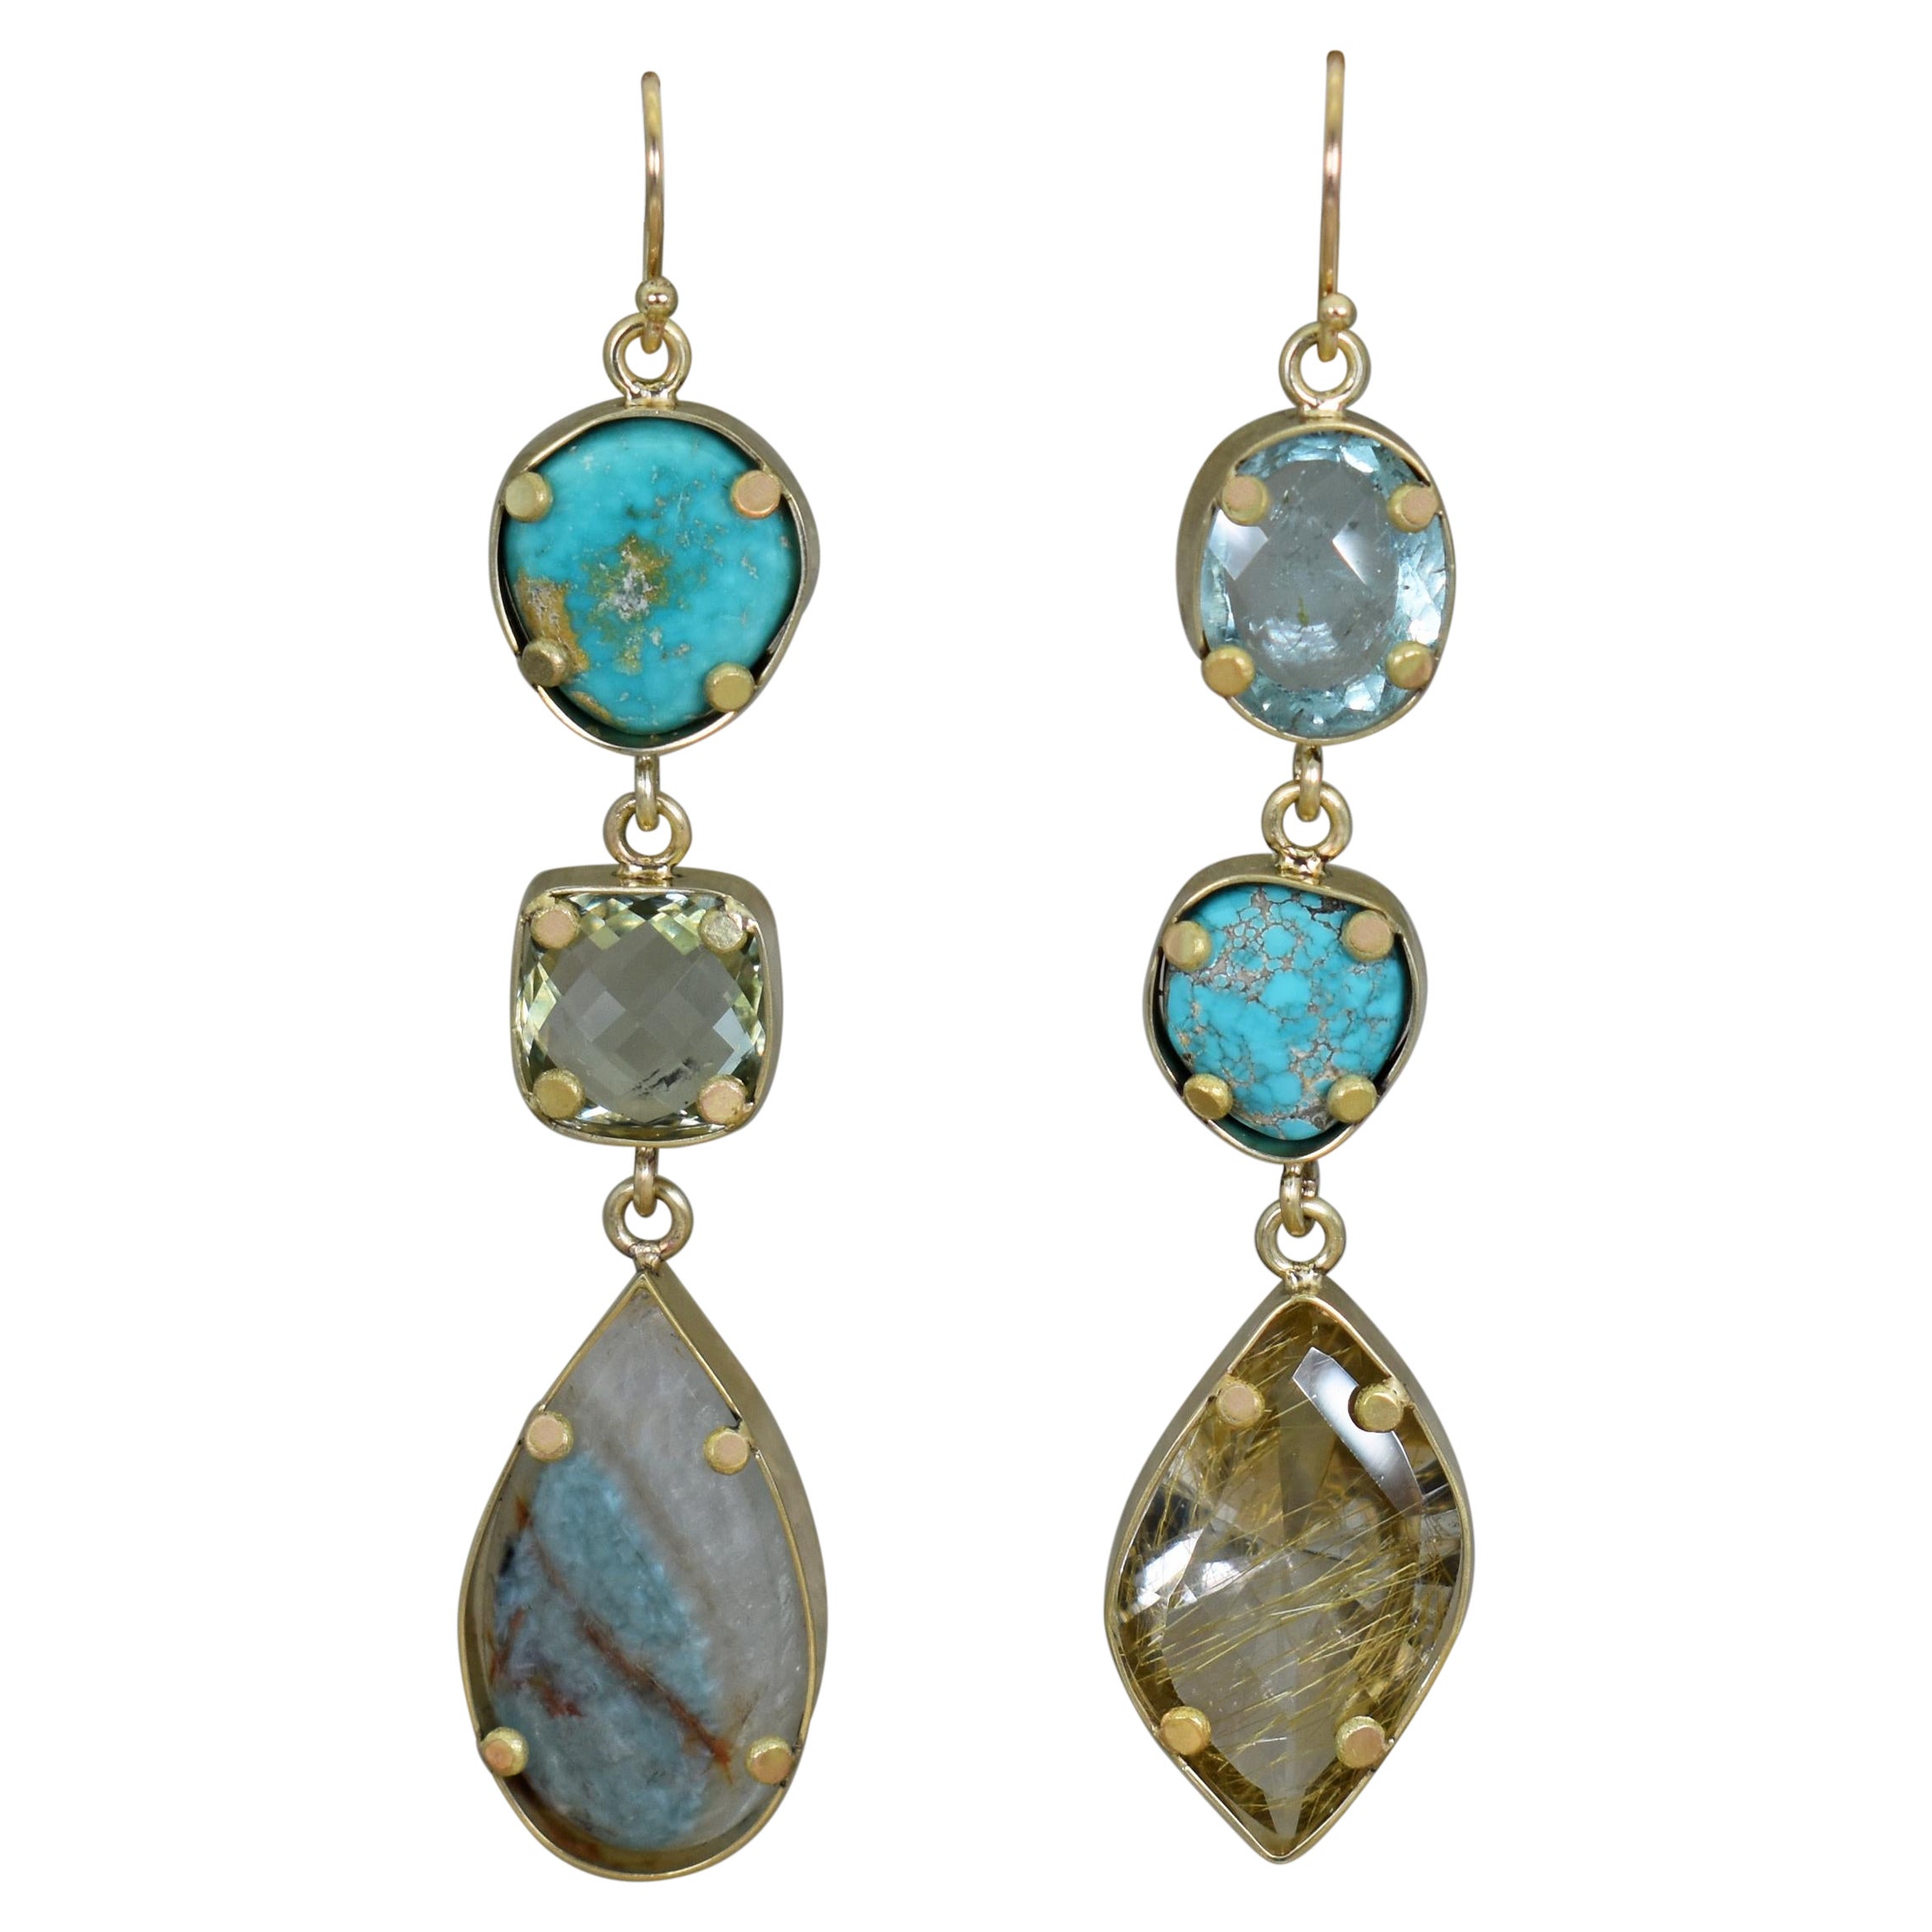 Turquoise, Aquamarine & Rutilated Quartz 18k Gold Asymmetrical Dangle Earrings